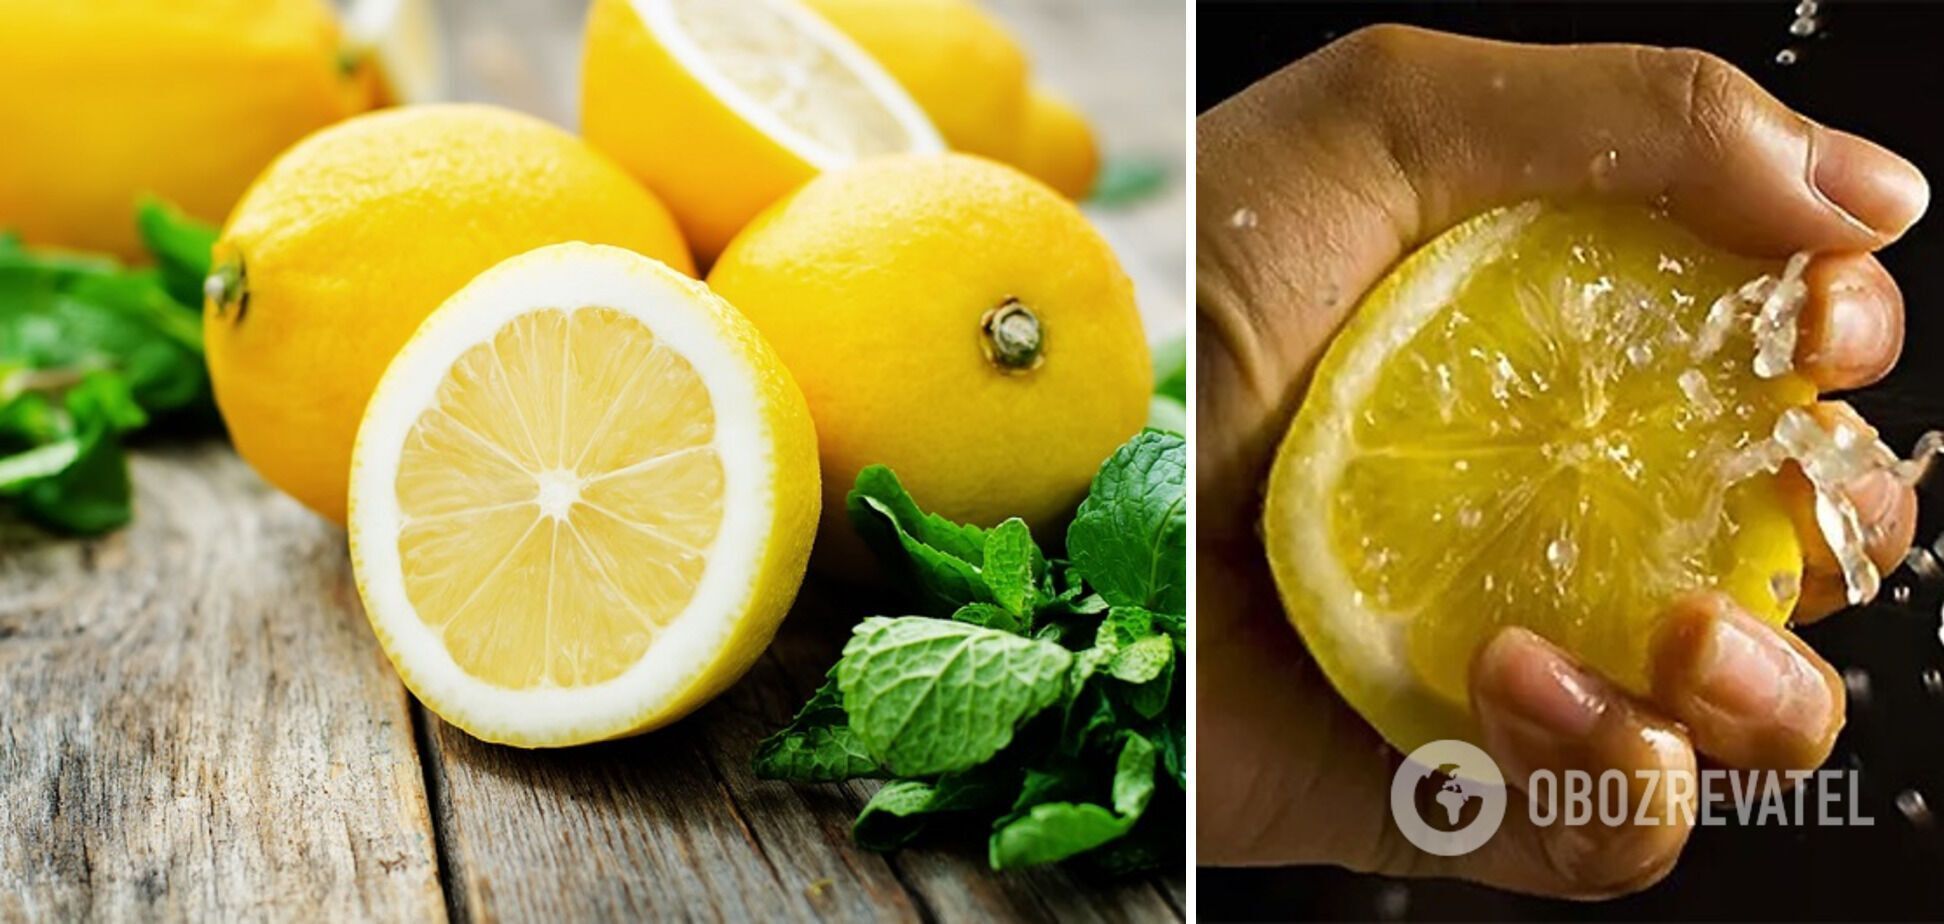 Citrus fruits help remove unpleasant odors